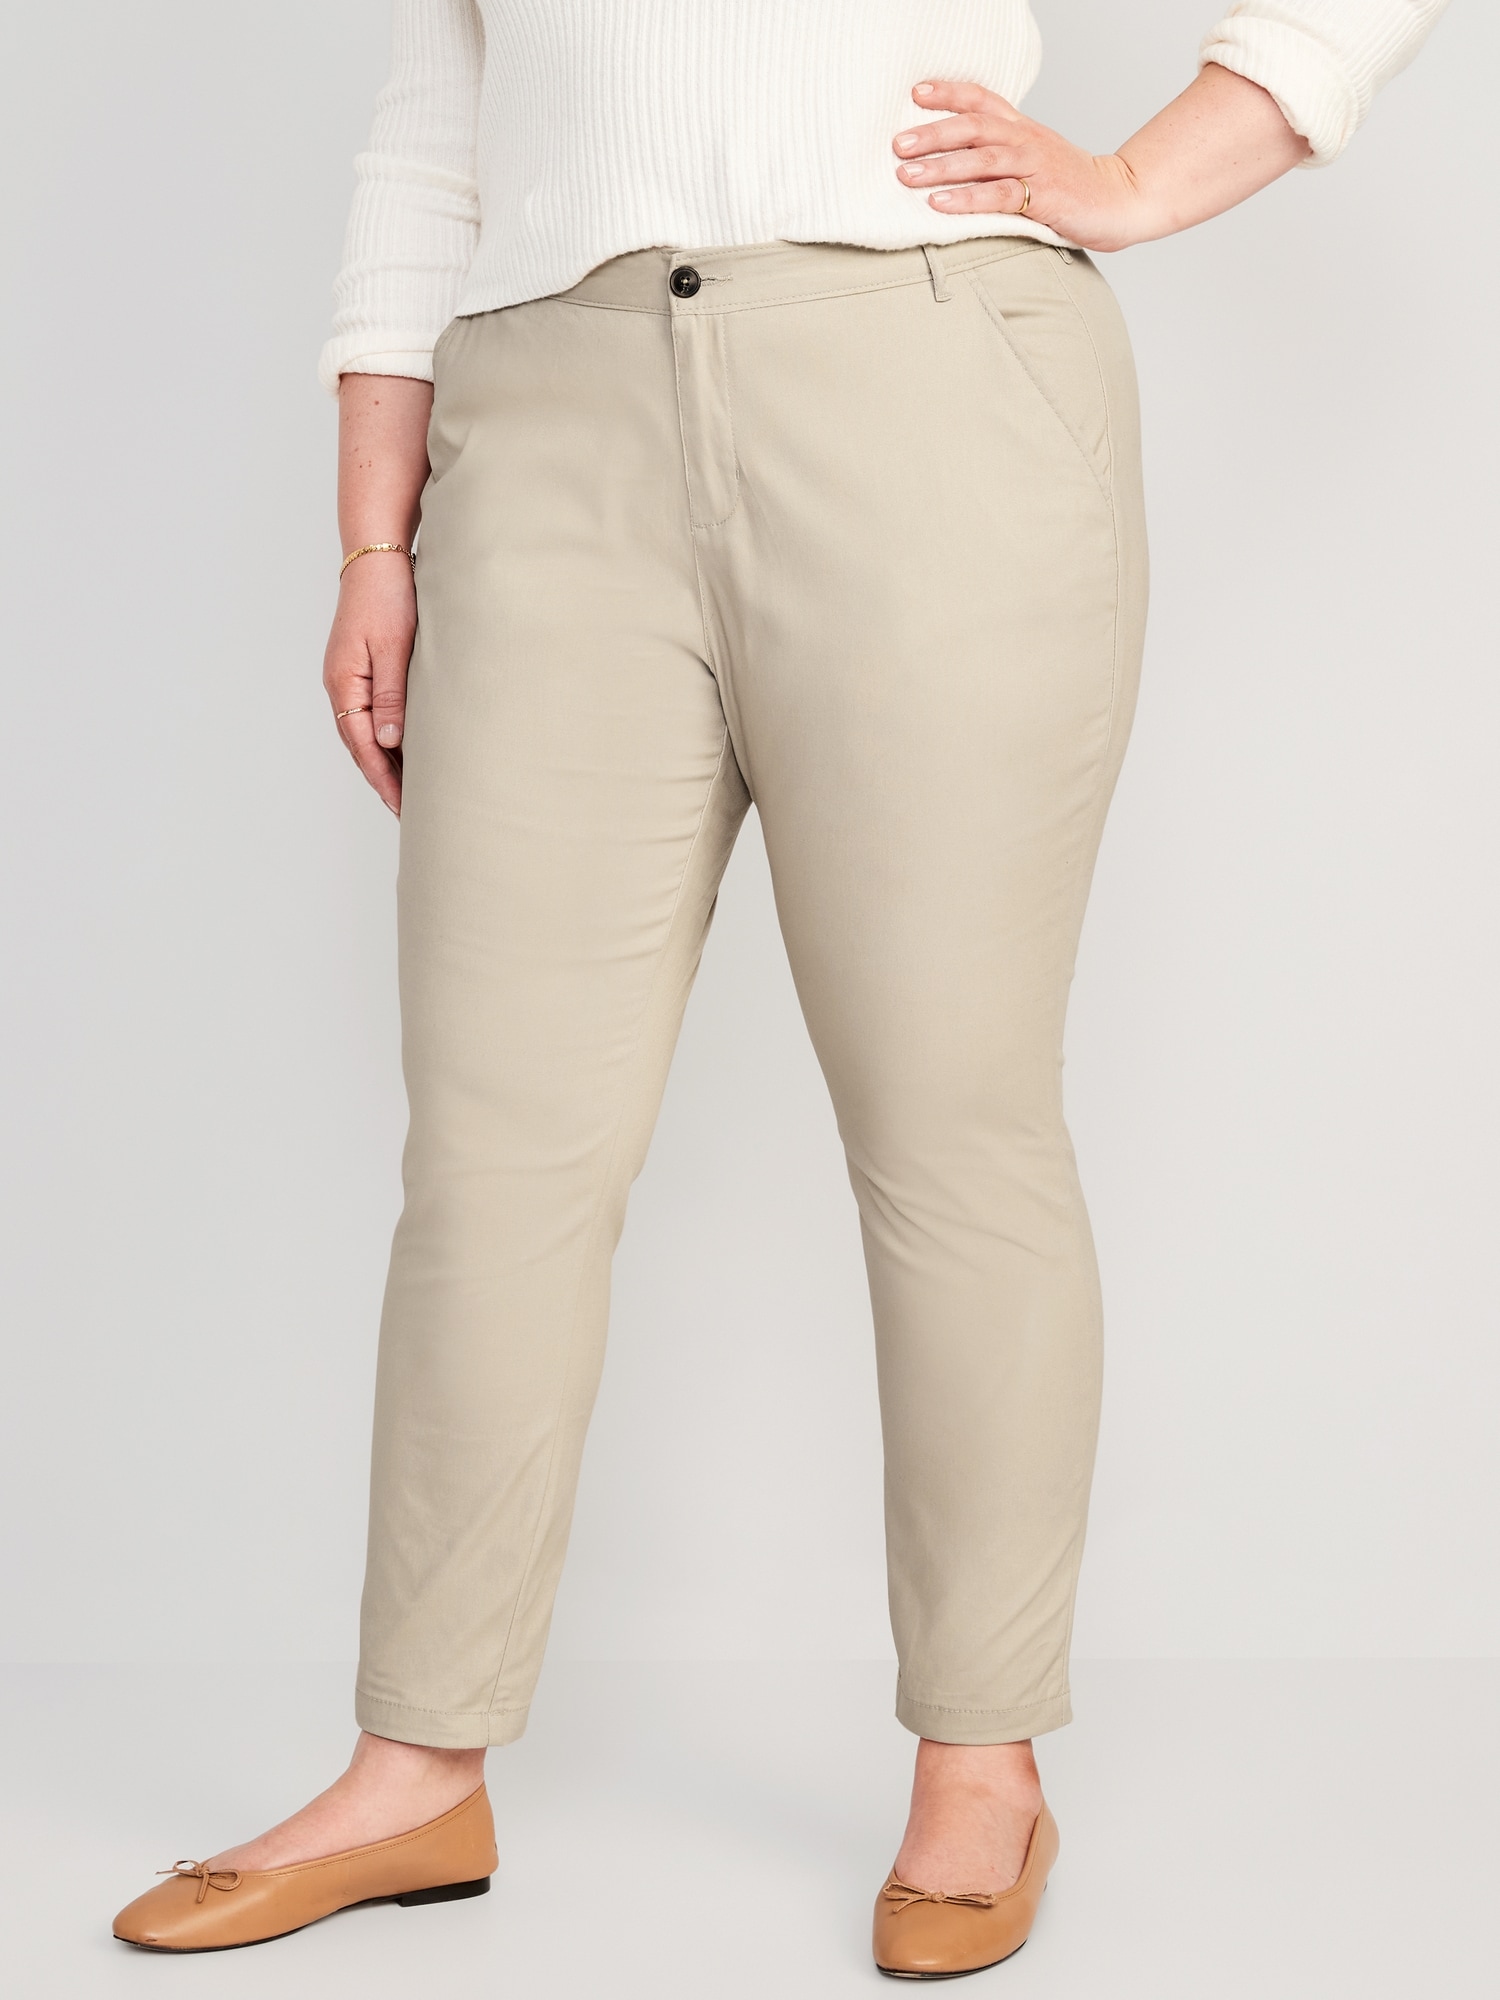 Old Navy Girls Skinny Uniform Rolled Oats Pants Size 14 Slim Beige